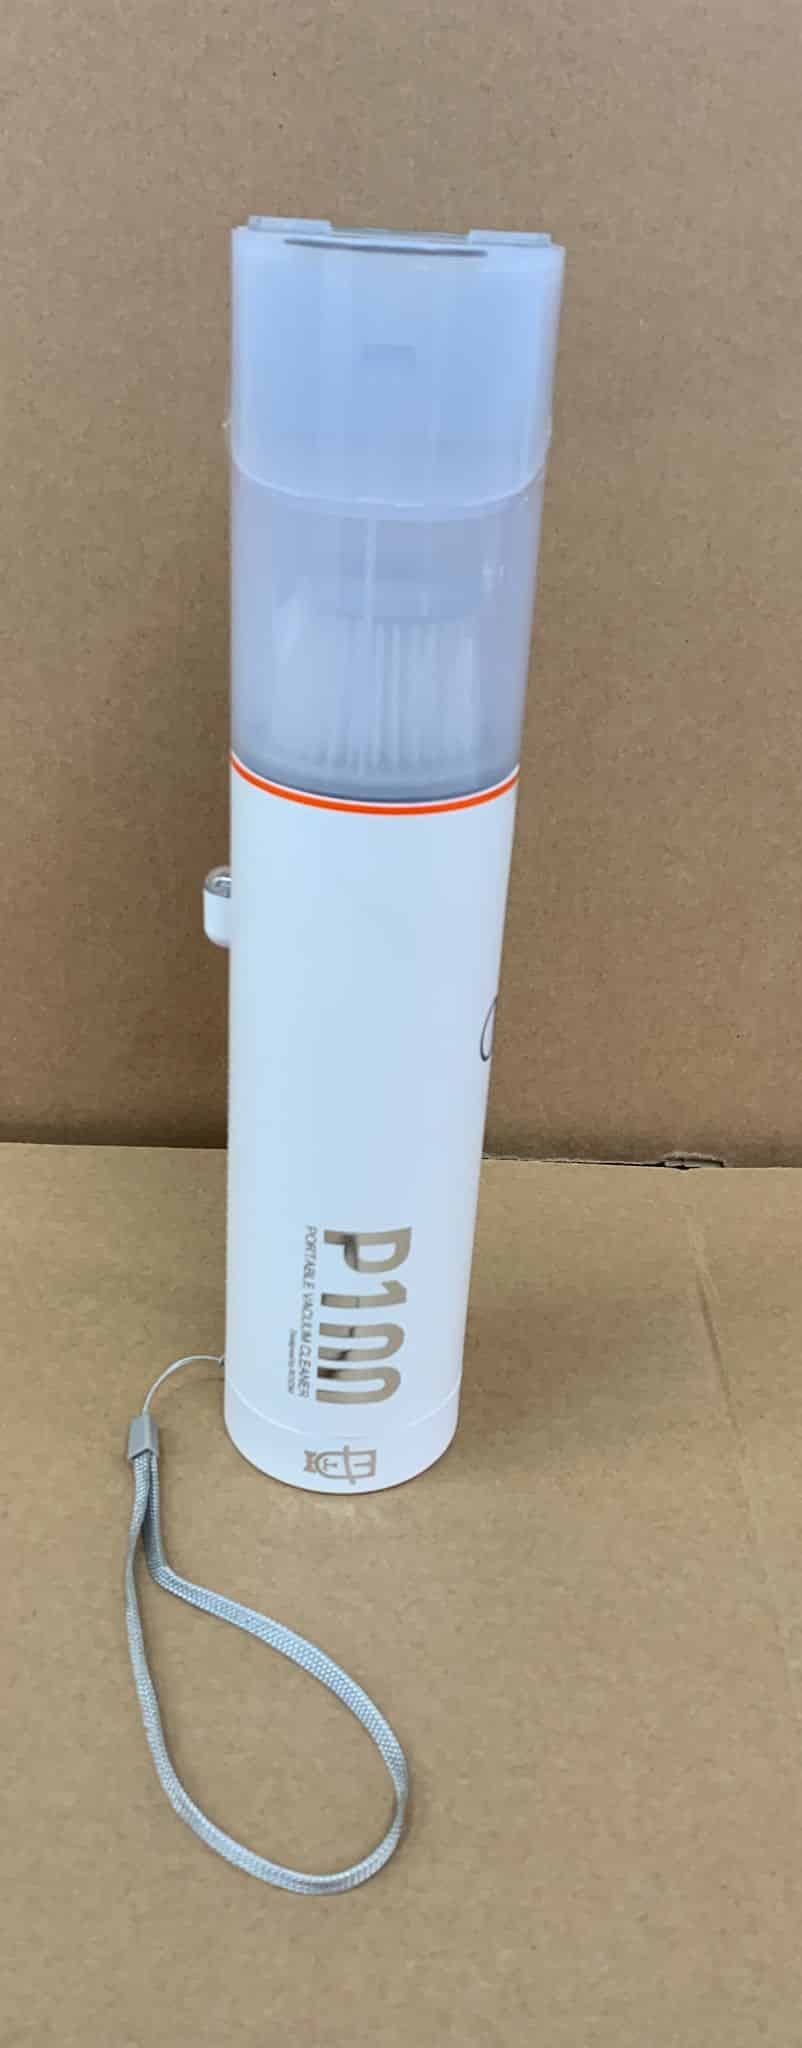 Roidmi Handstaubsauger P1 PRO White Portable Hand Vacuum Cleaner 8149